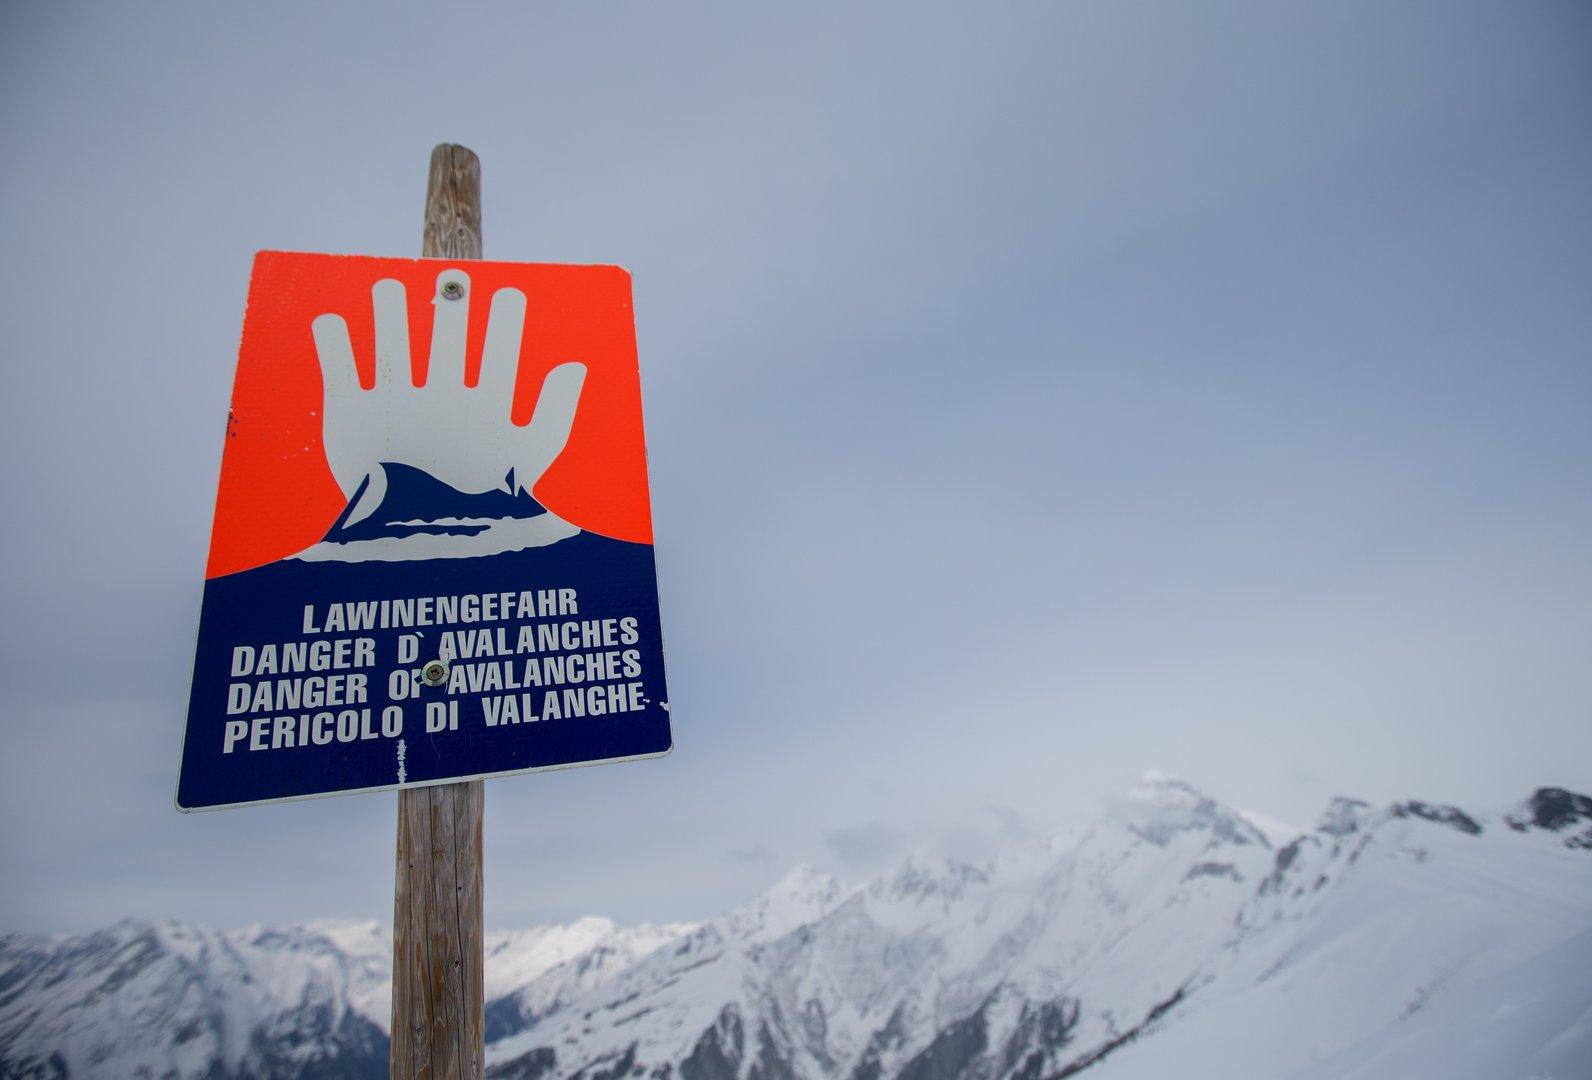 29-jähriger Alpinist im Salzburger Pinzgau vermisst